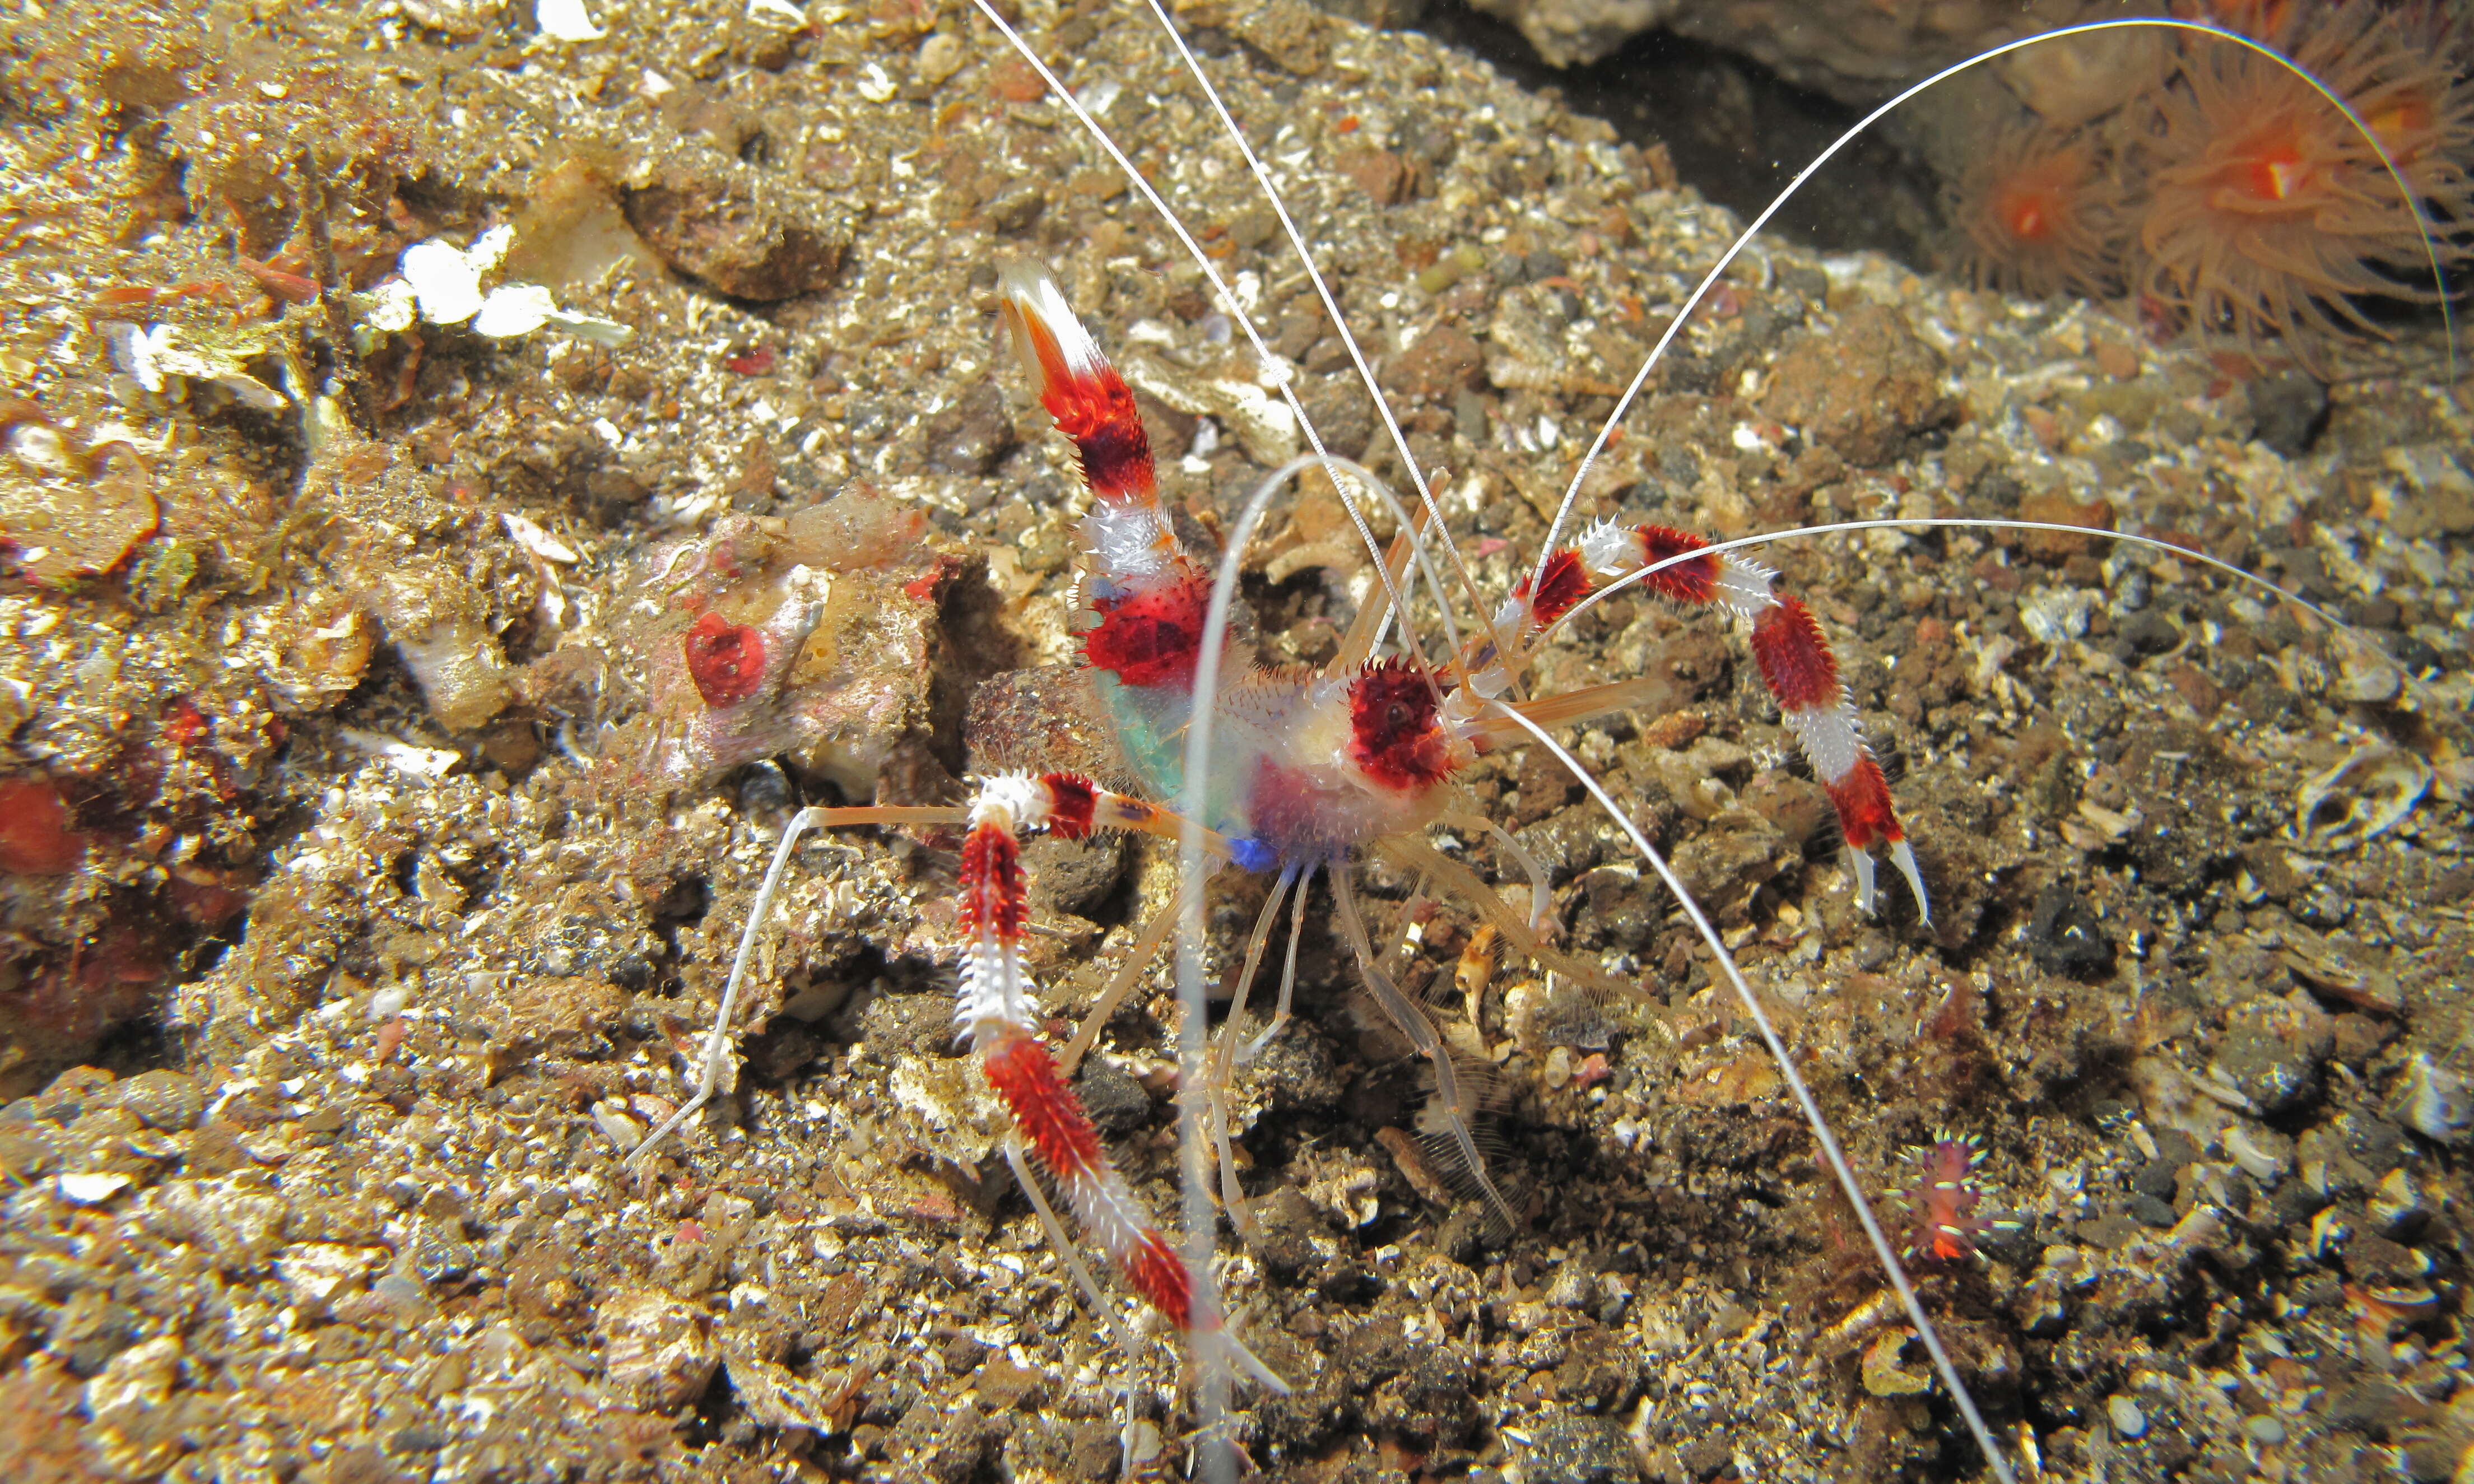 Image of coral shrimps